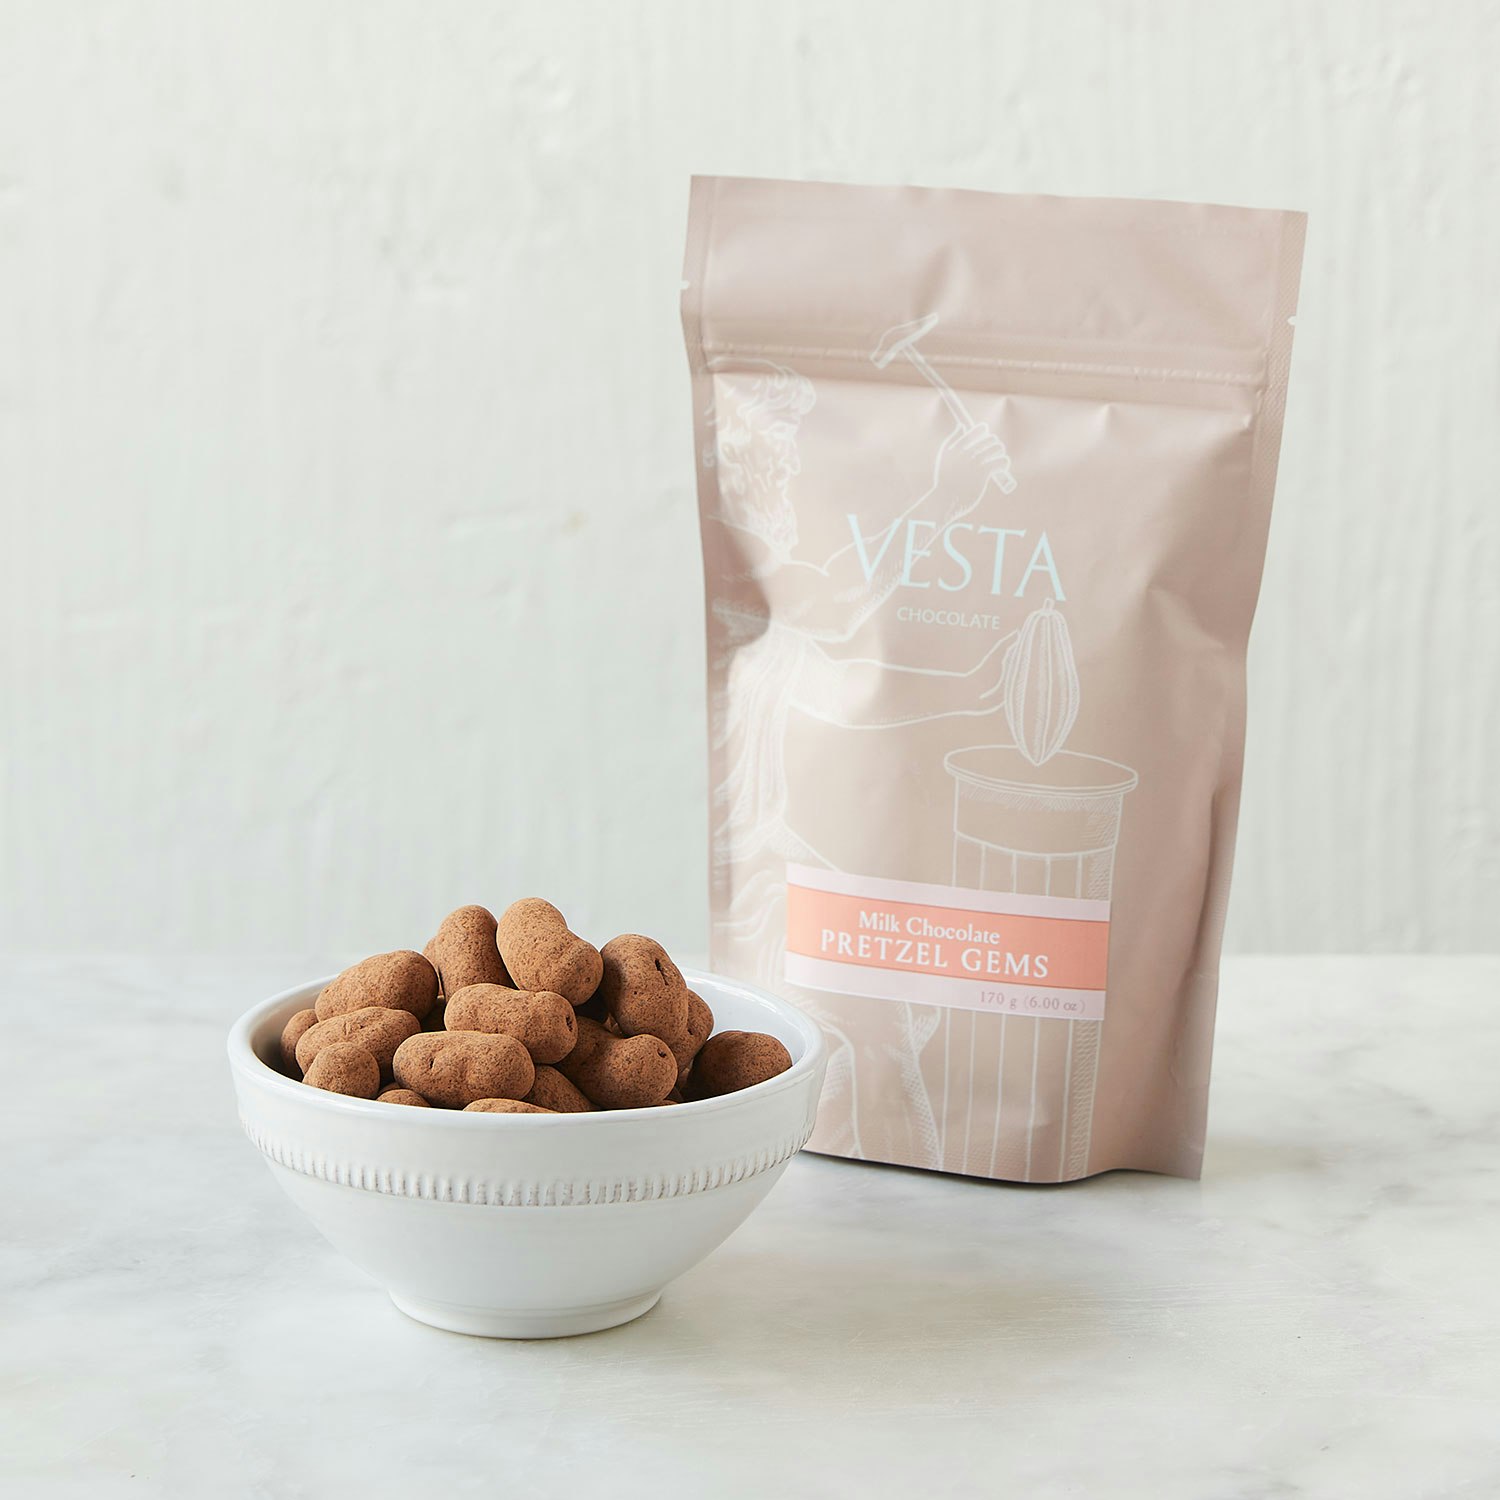 Vesta Chocolate Milk Chocolate Covered Pretzel Gems specialty foods